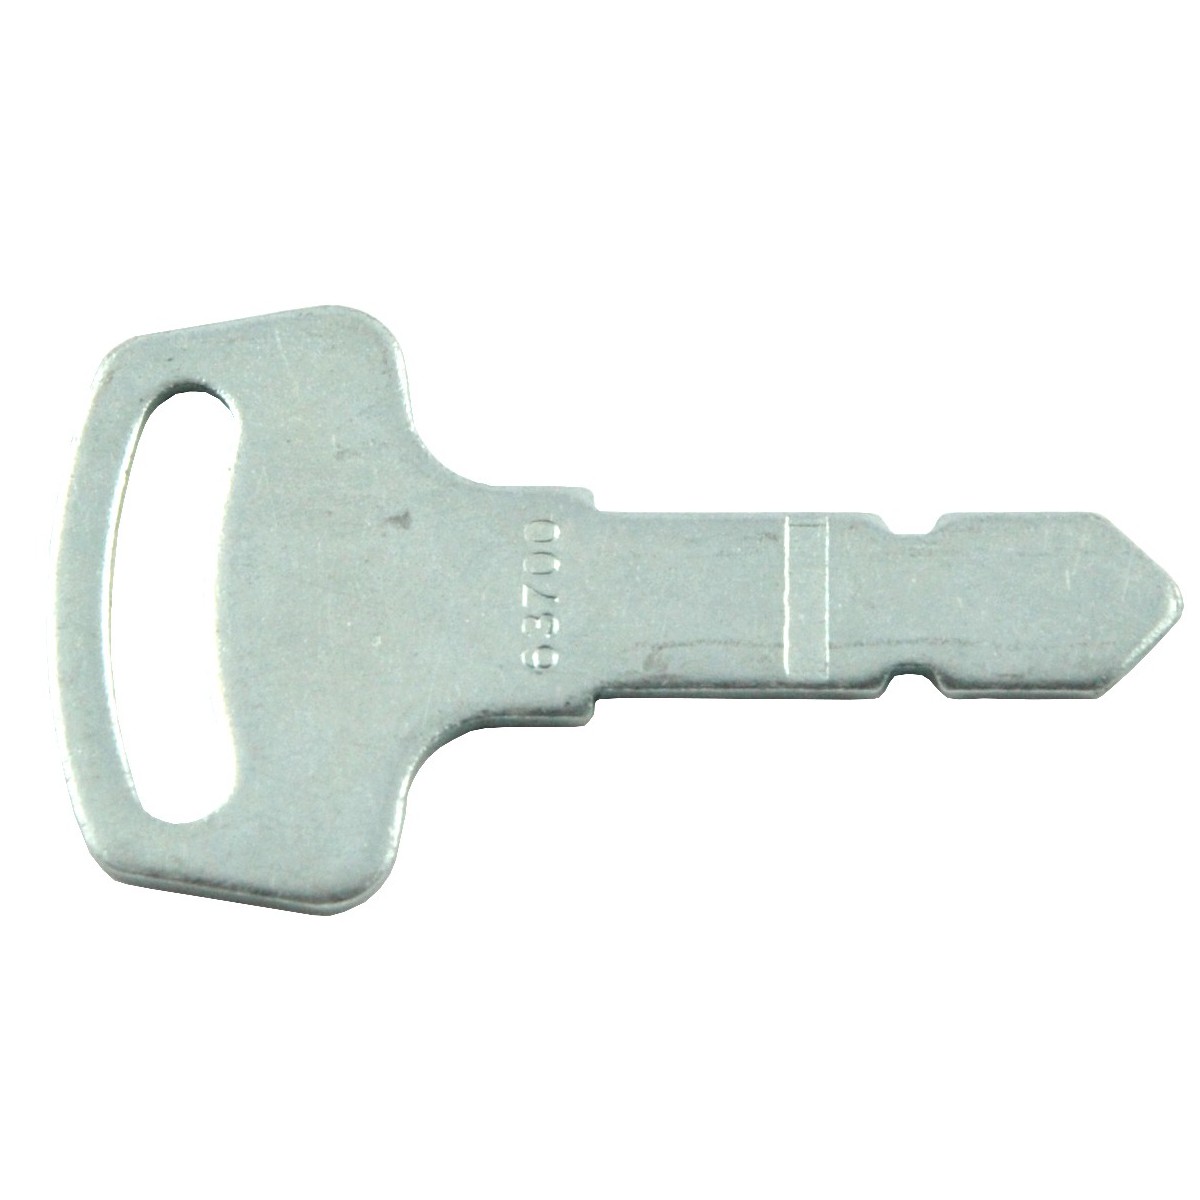 Schlüssel für das Zündschloss Kubota Case New Holland 15248-63700